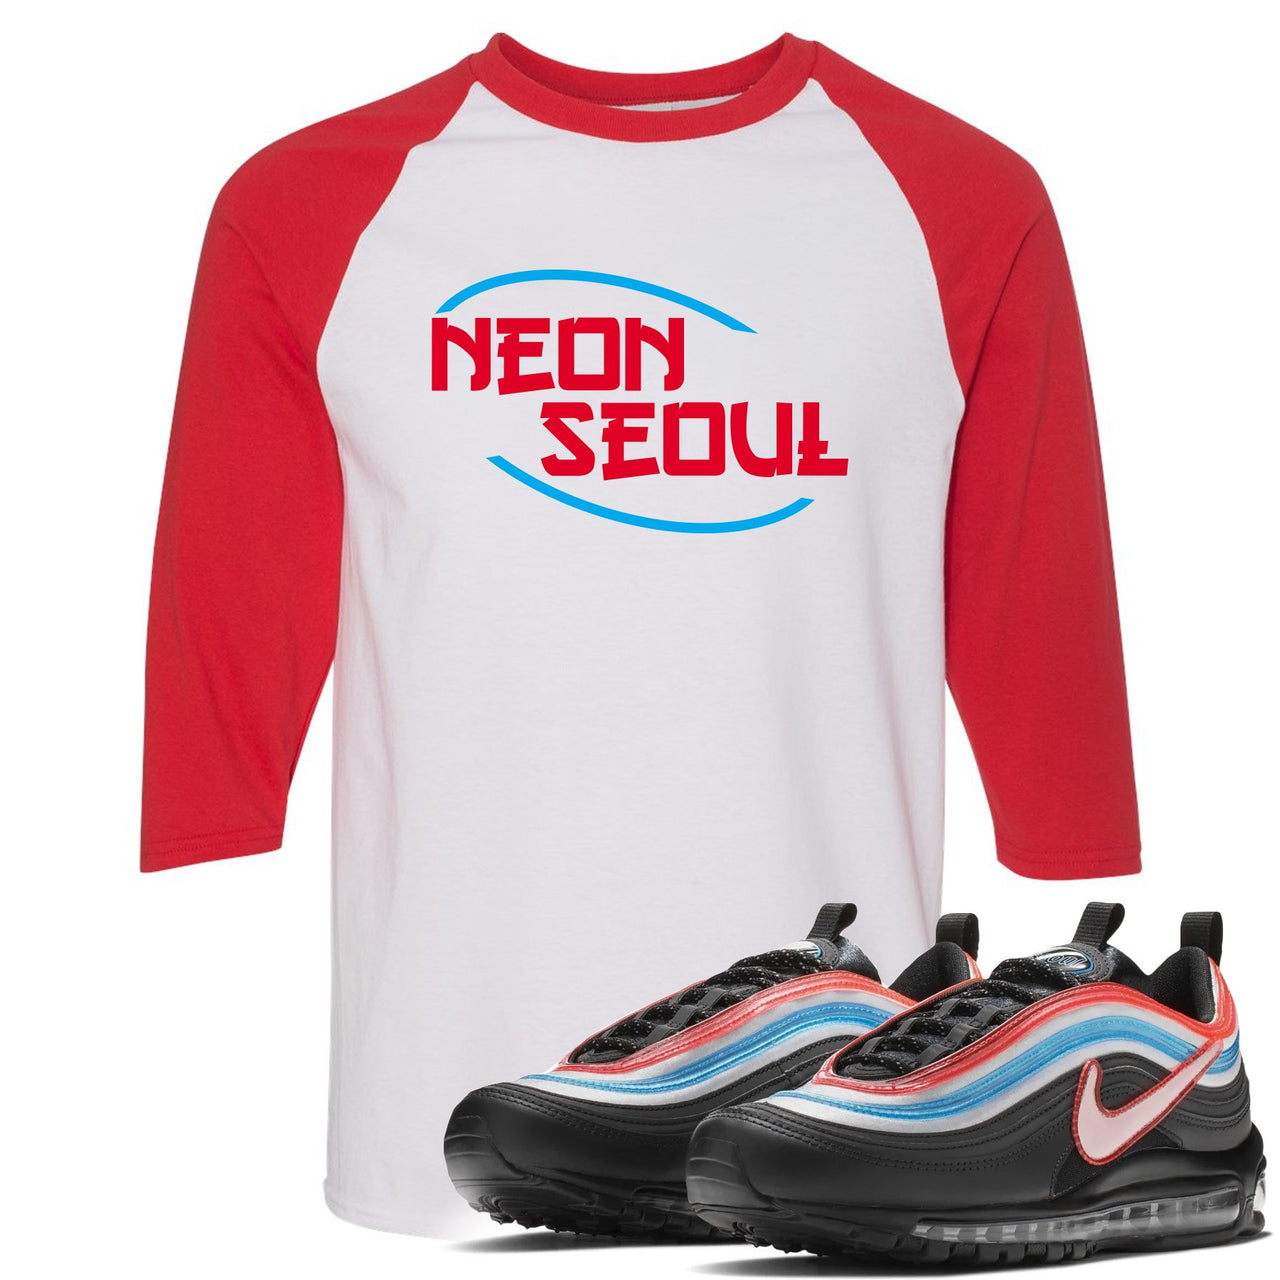 Neon Seoul 97s Raglan T Shirt | Seoul in English, White and Red